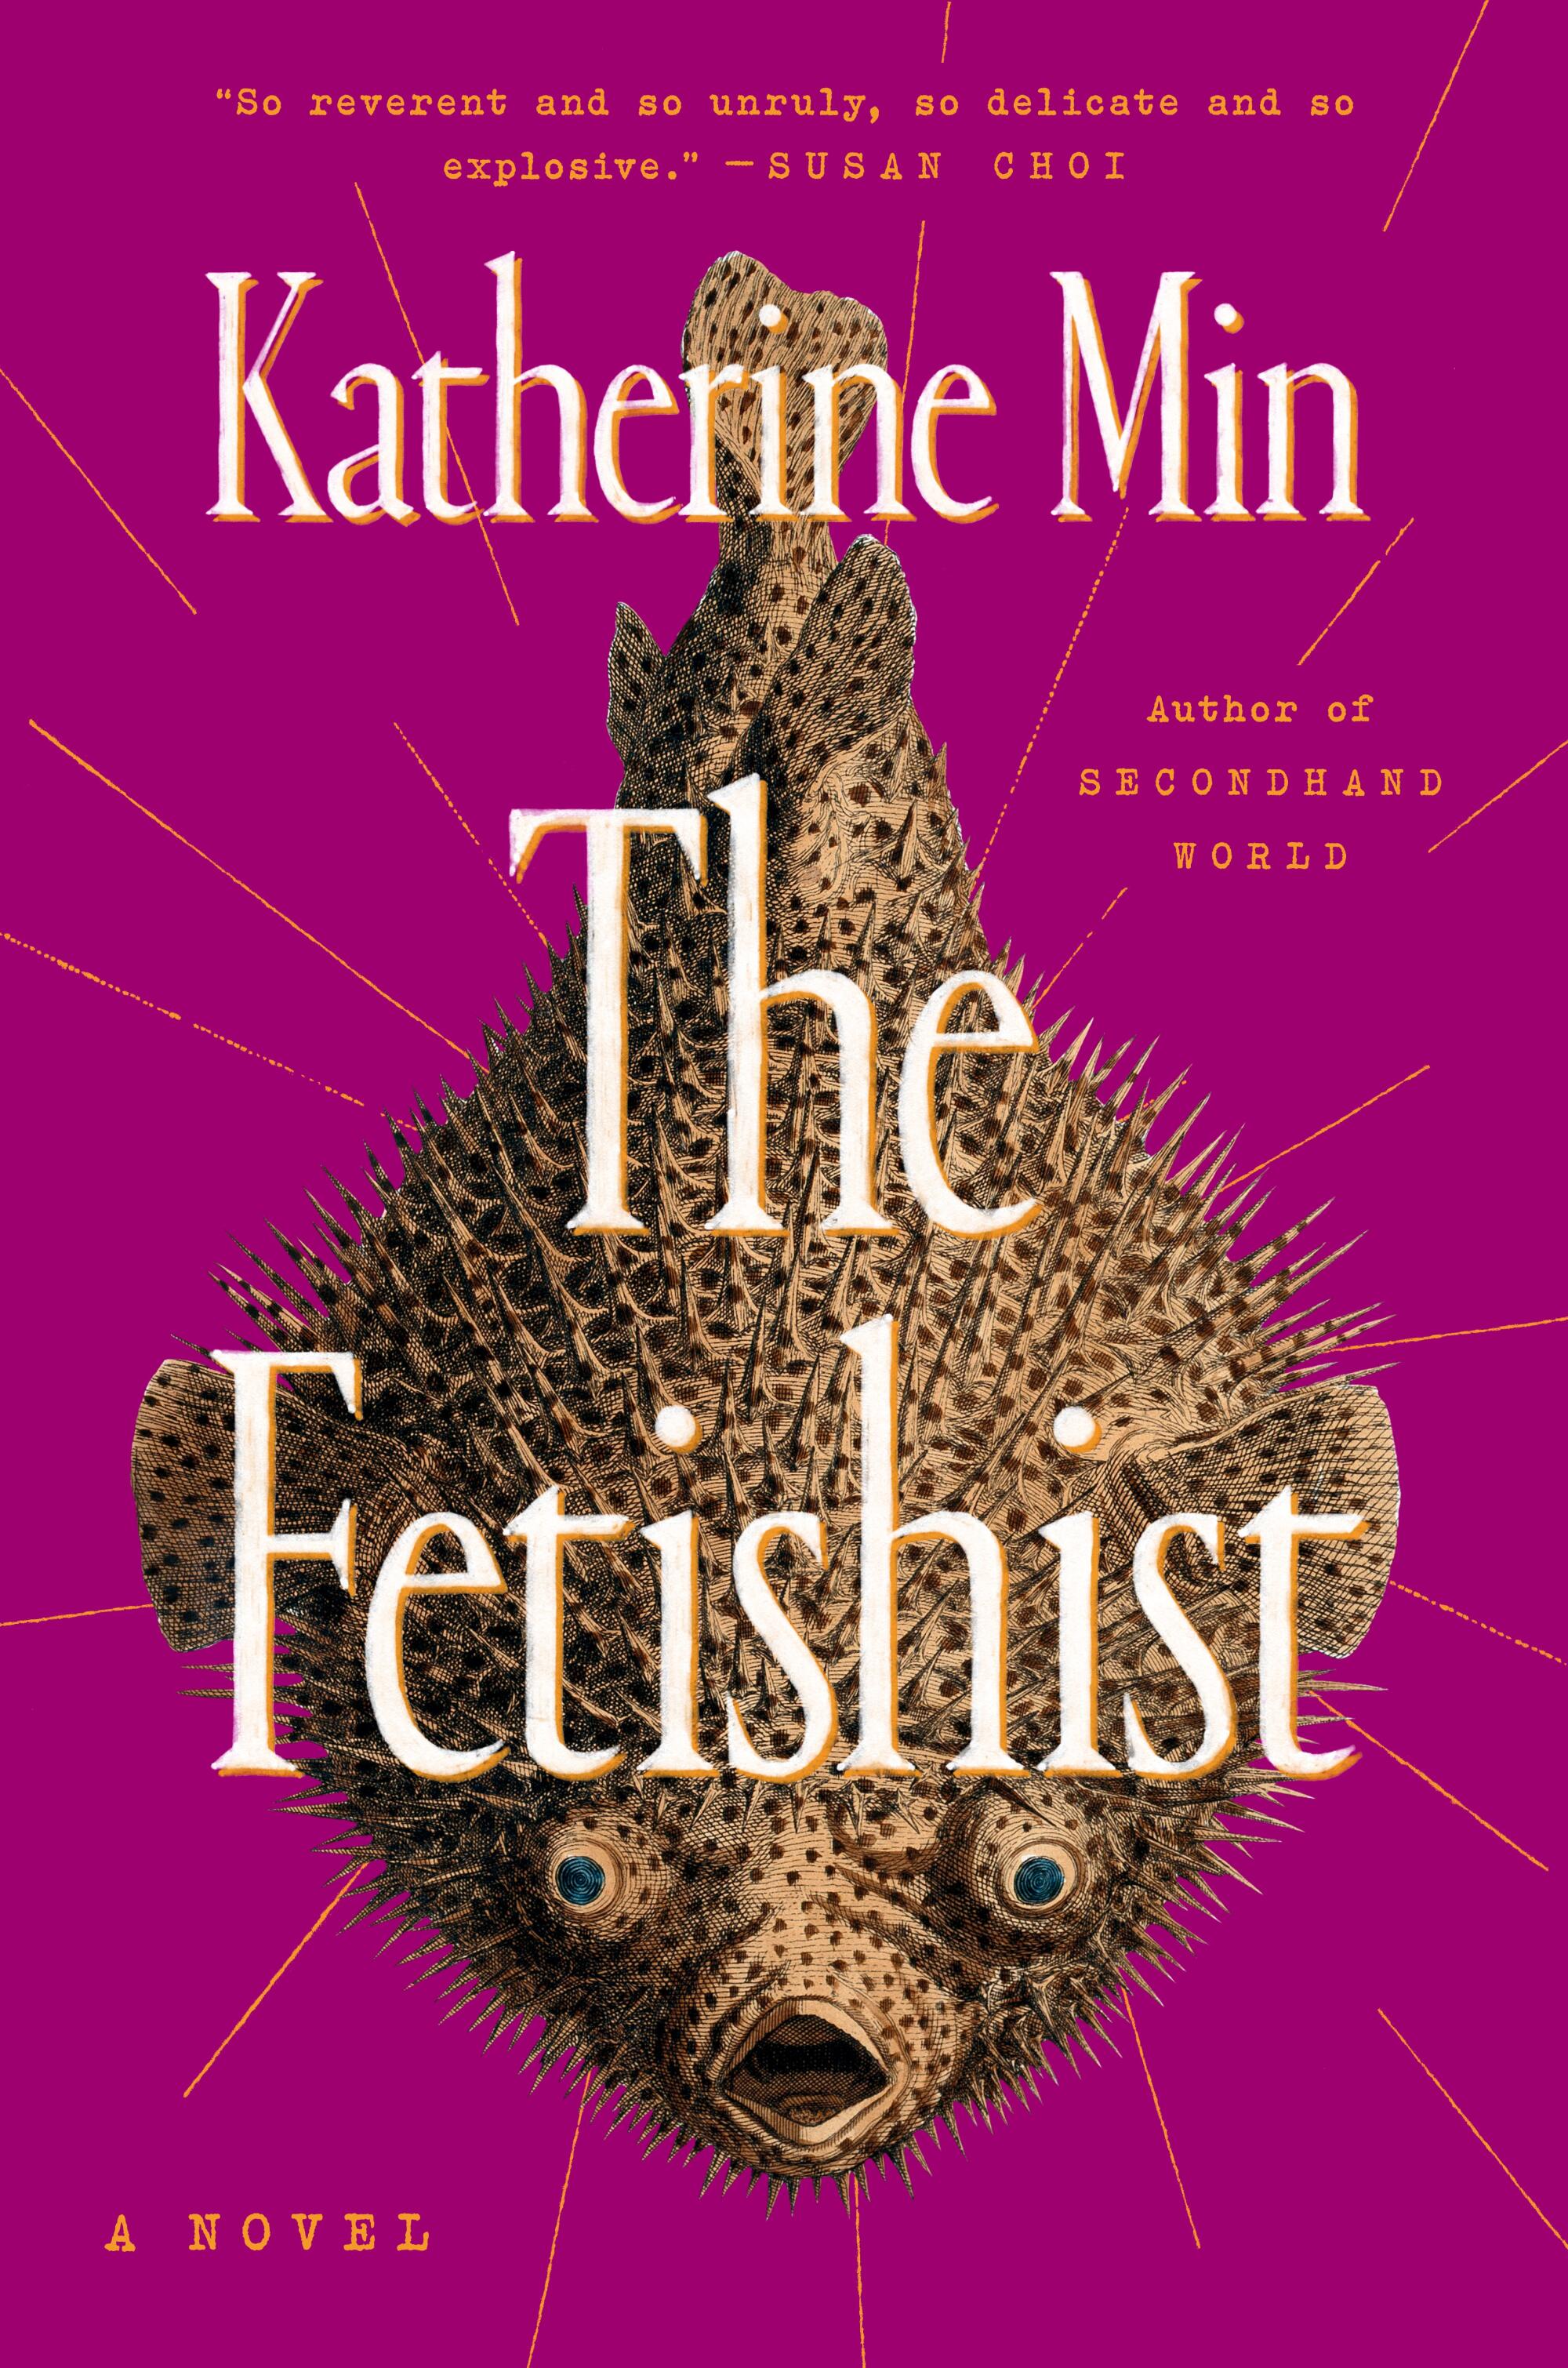 "The Fetishist" cover